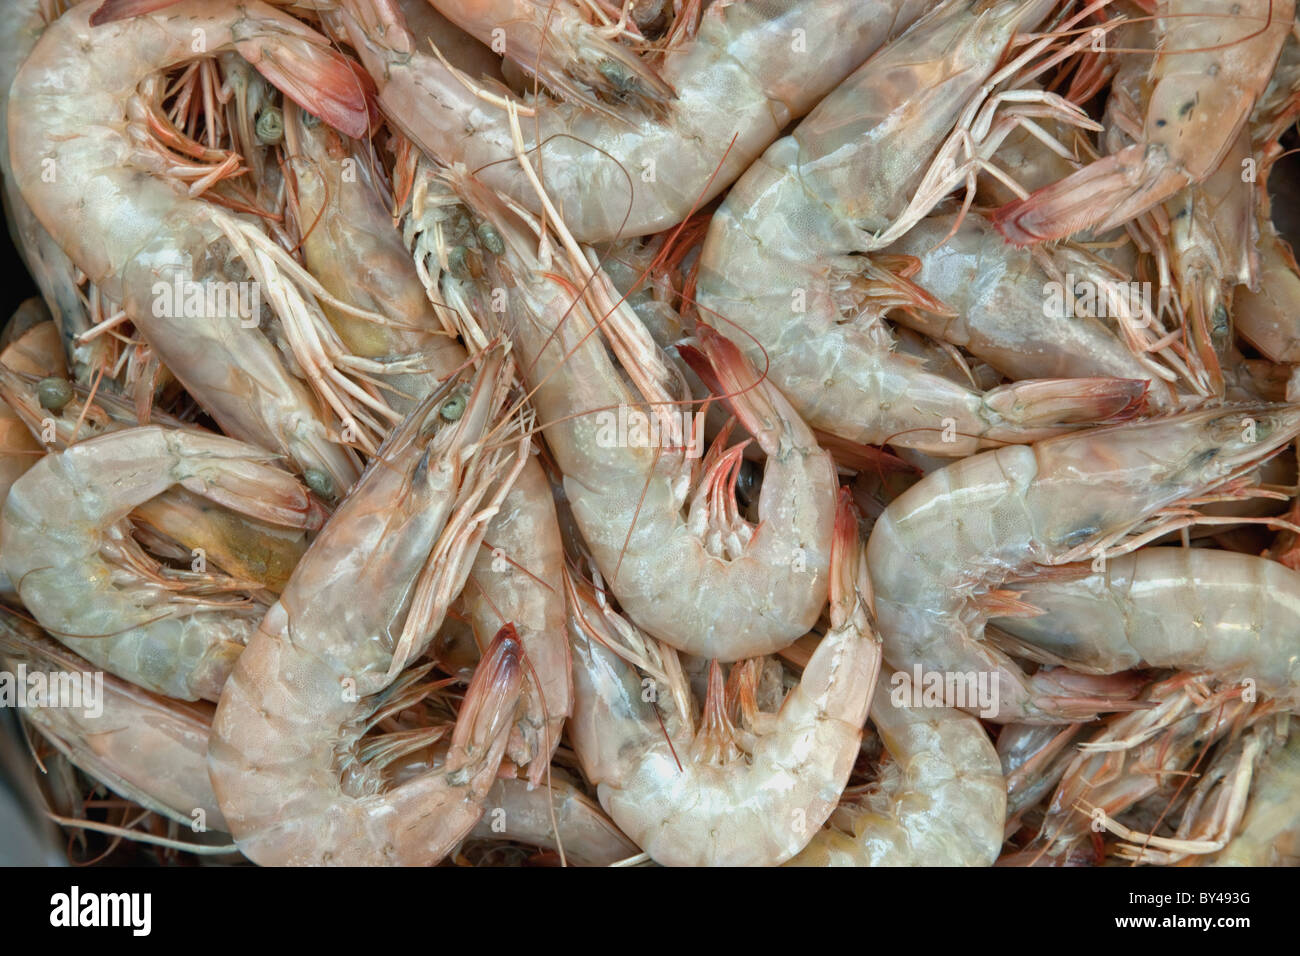 Brown Shrimp catch, Stock Photo